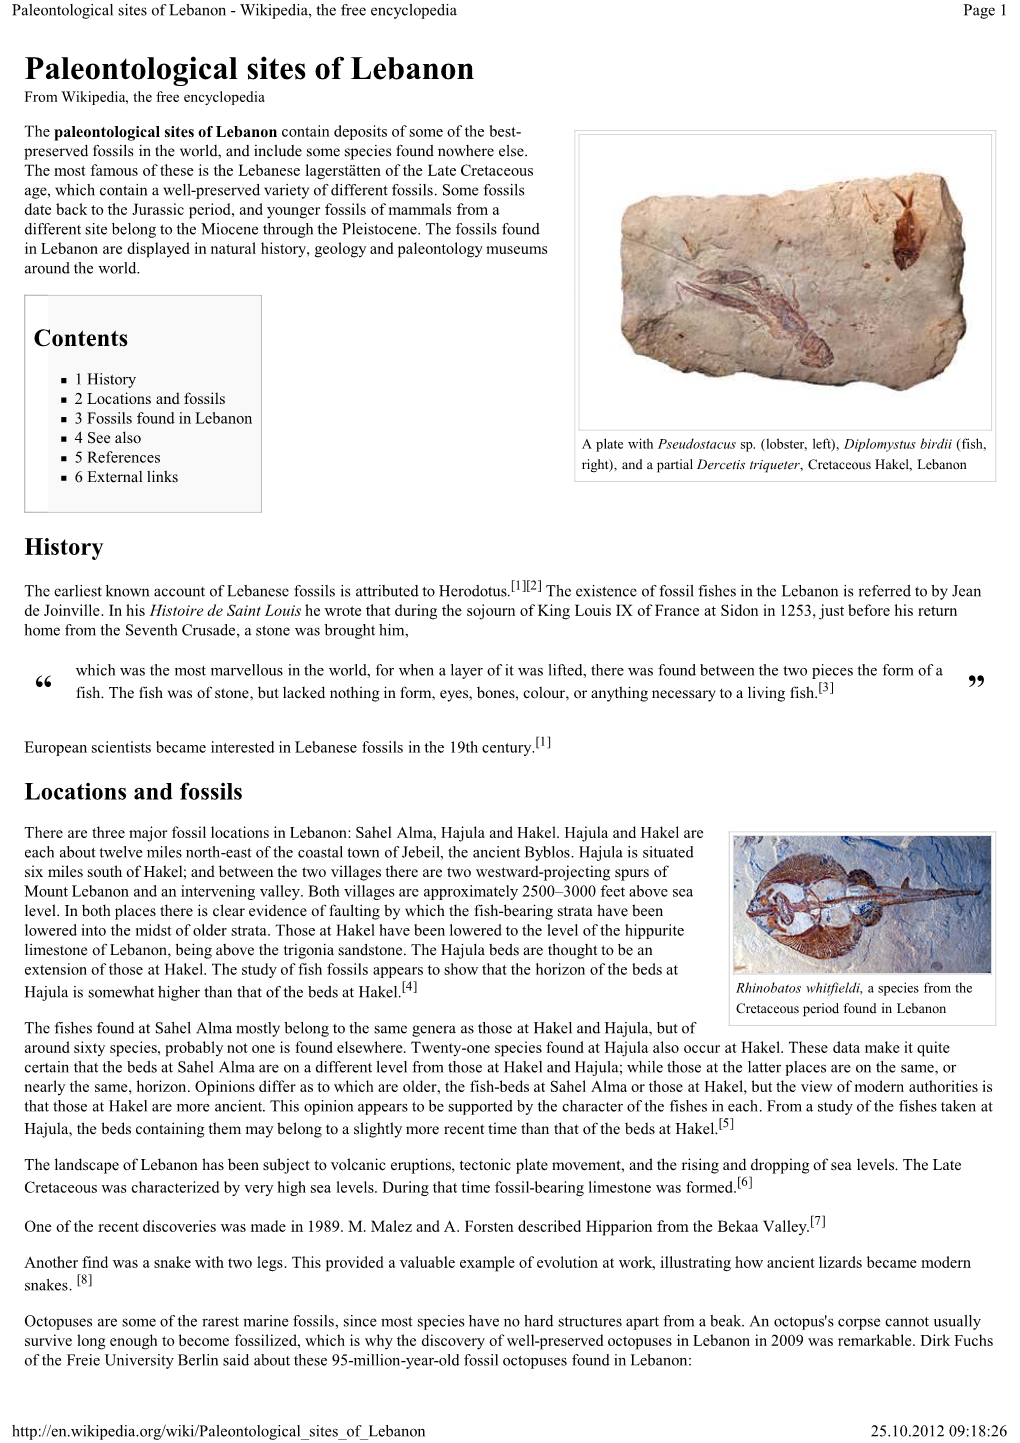 Paleontological Sites of Lebanon - Wikipedia, the Free Encyclopedia Page 1